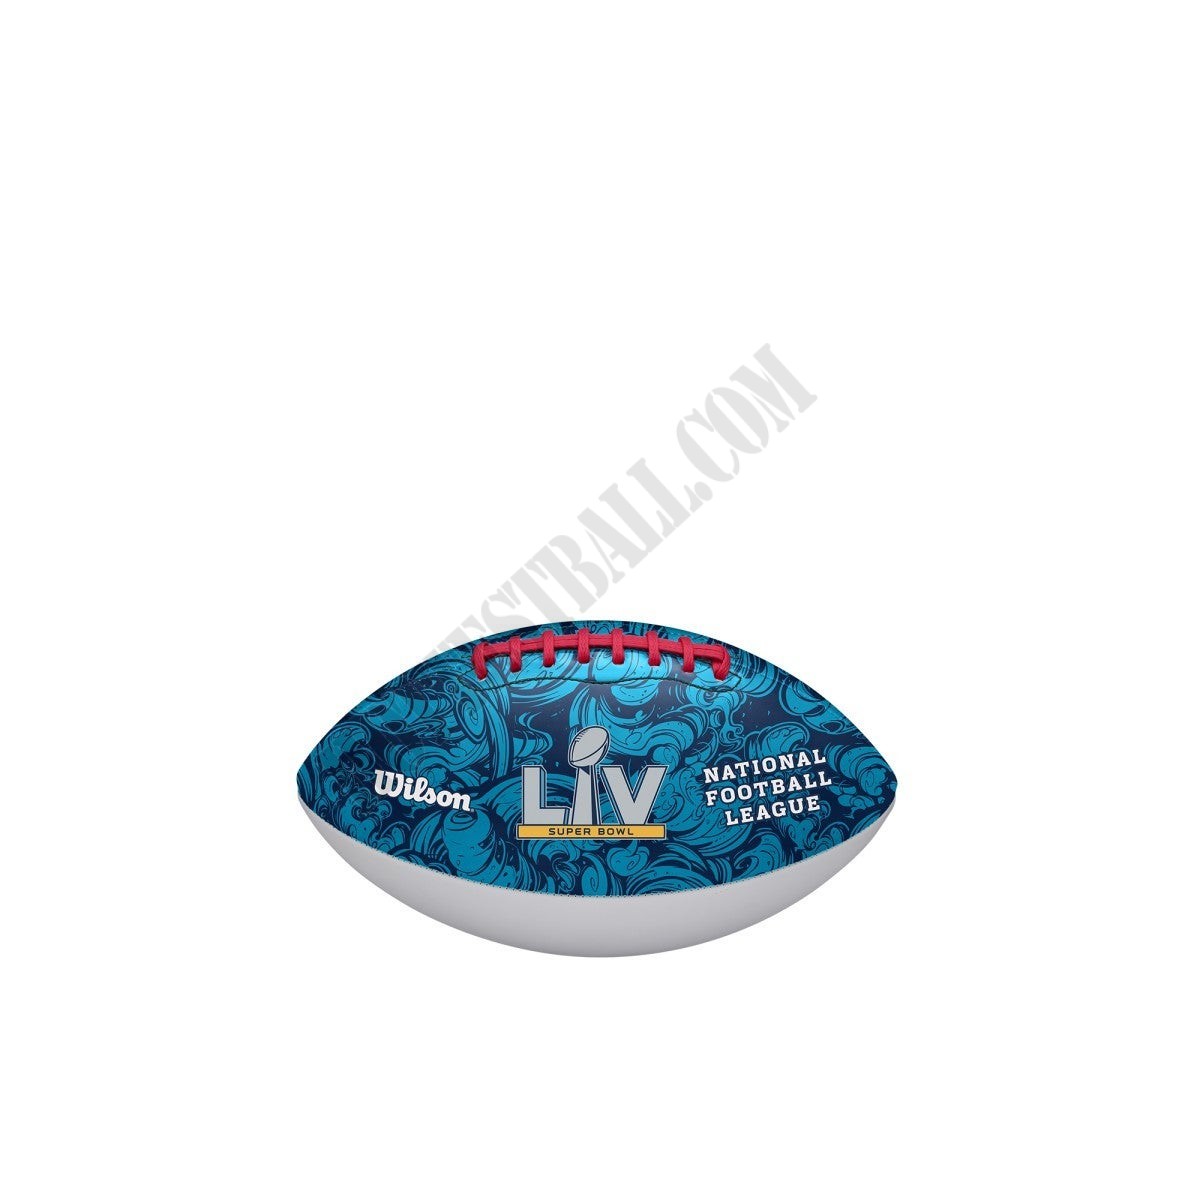 Super Bowl LV Mini Autograph Football ● Wilson Promotions - Super Bowl LV Mini Autograph Football ● Wilson Promotions